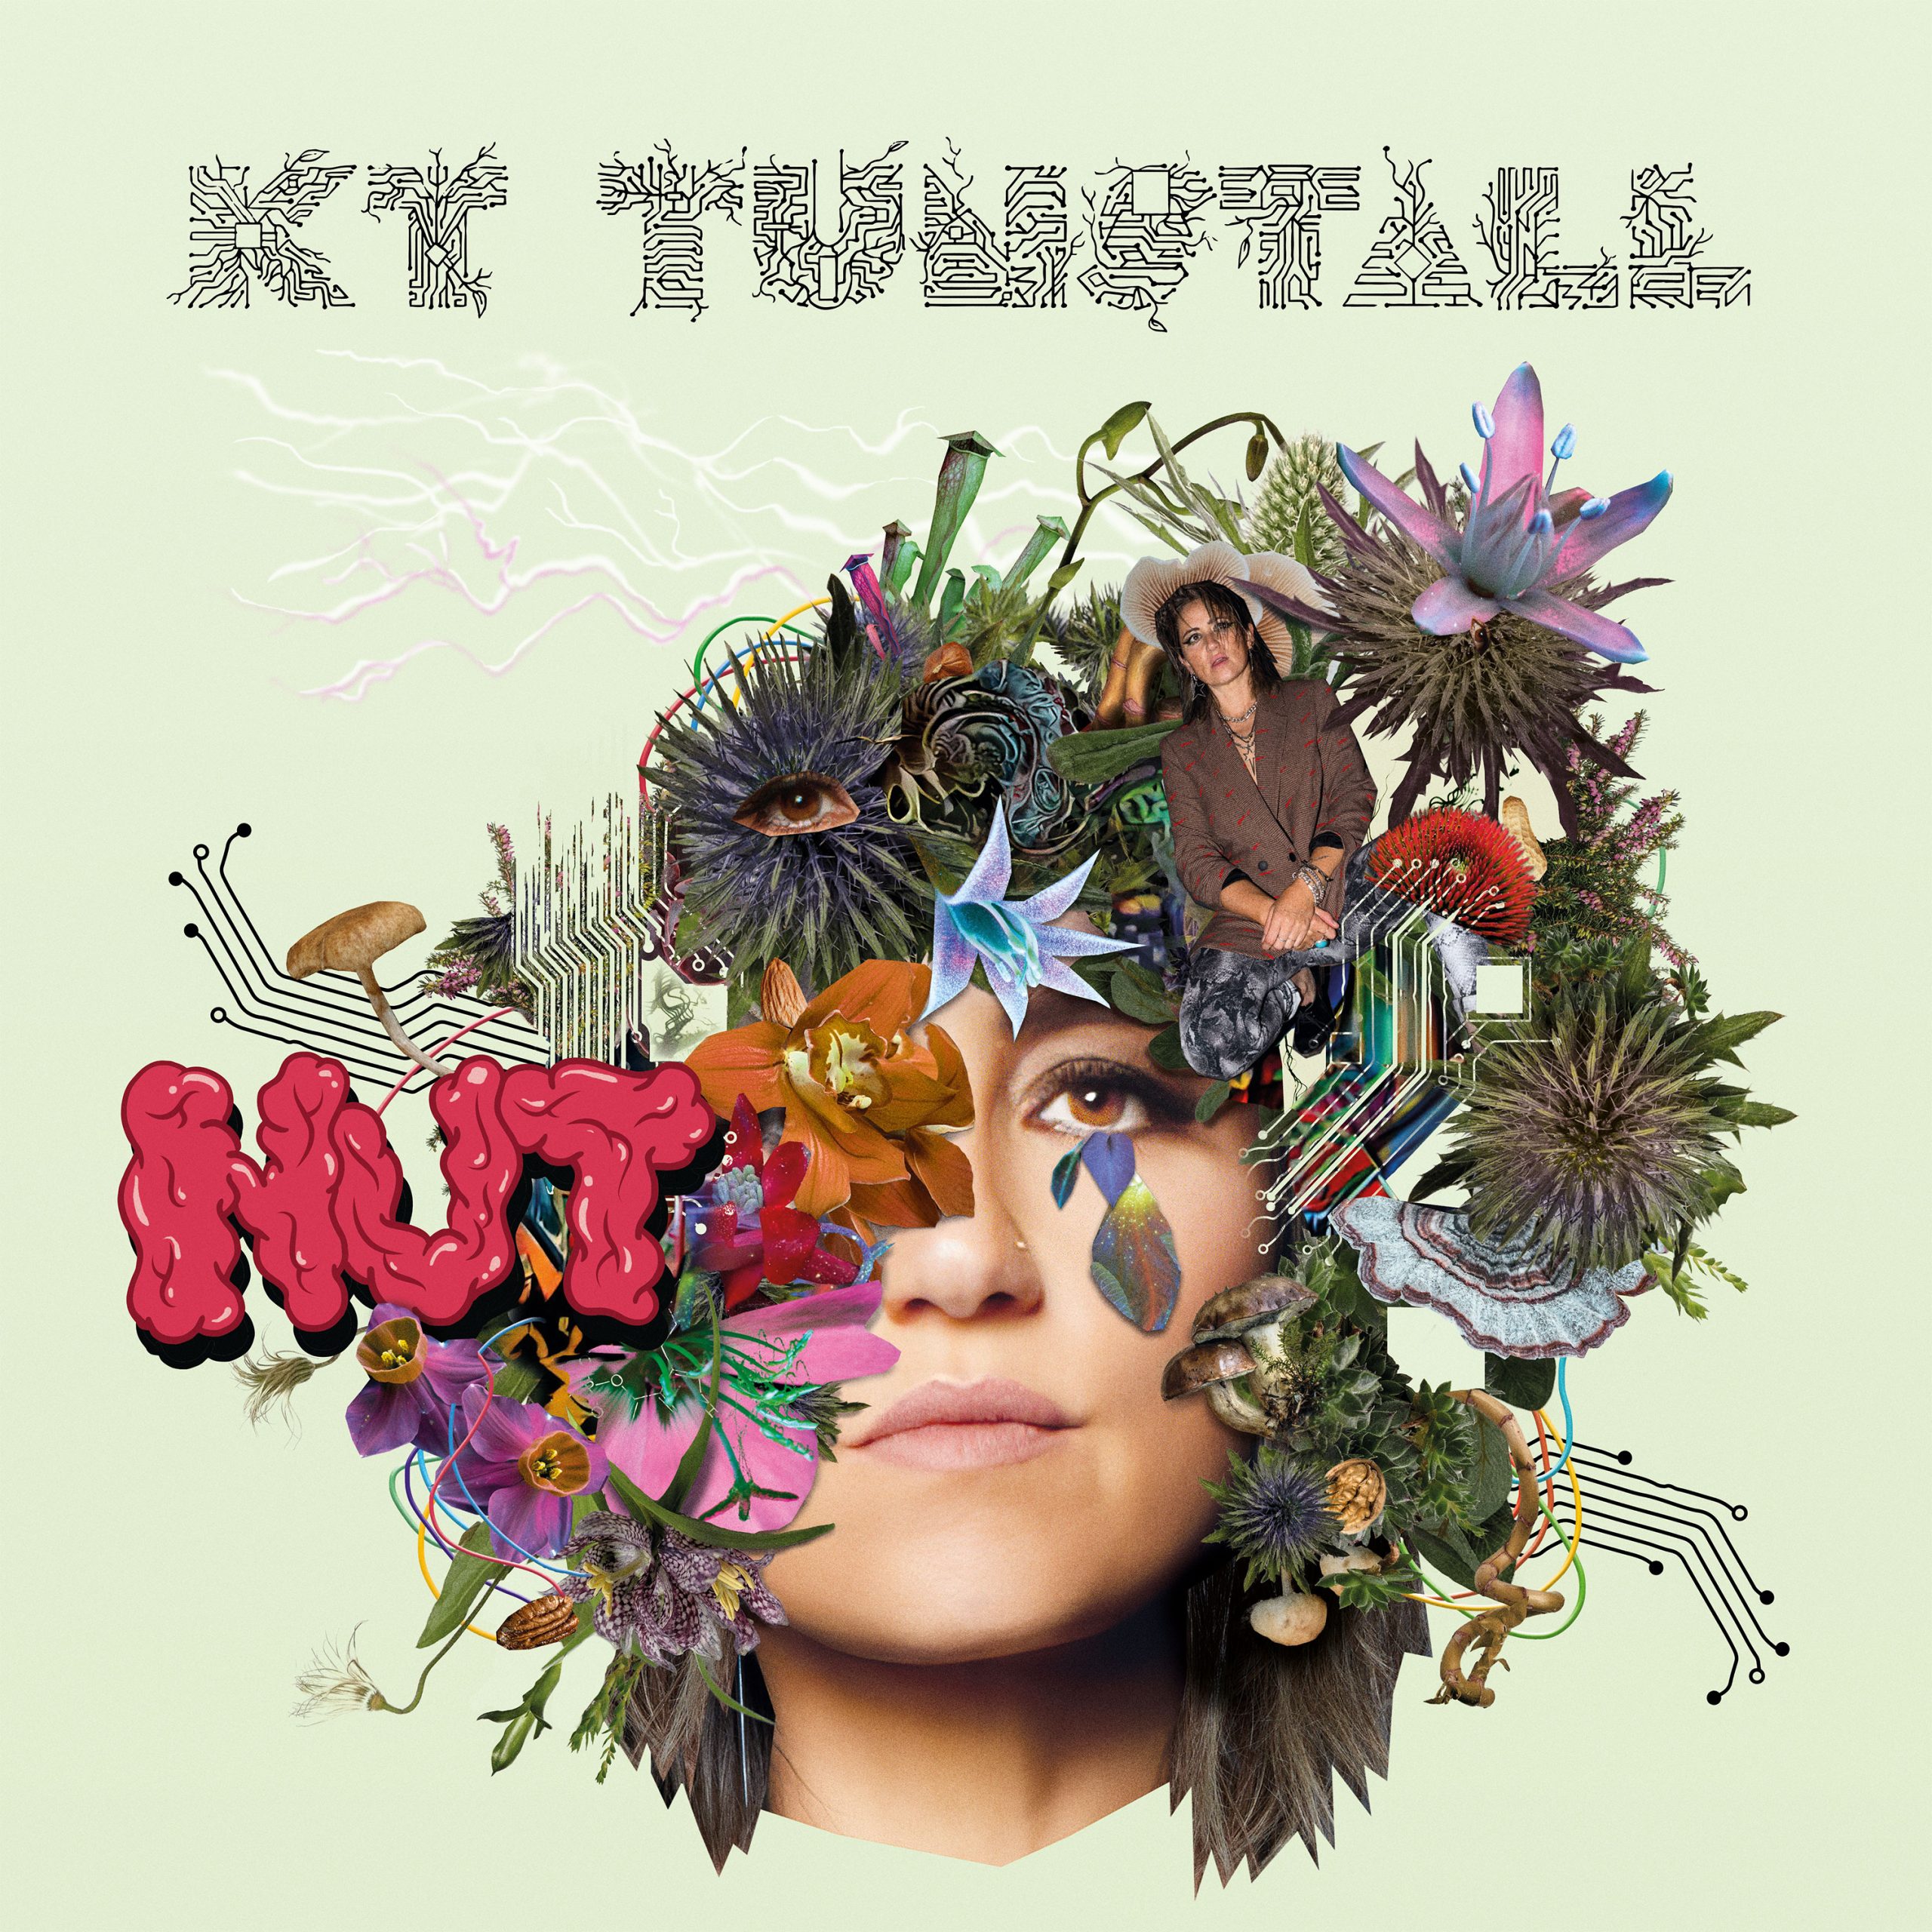 KT Tunstall NUT cover artwork